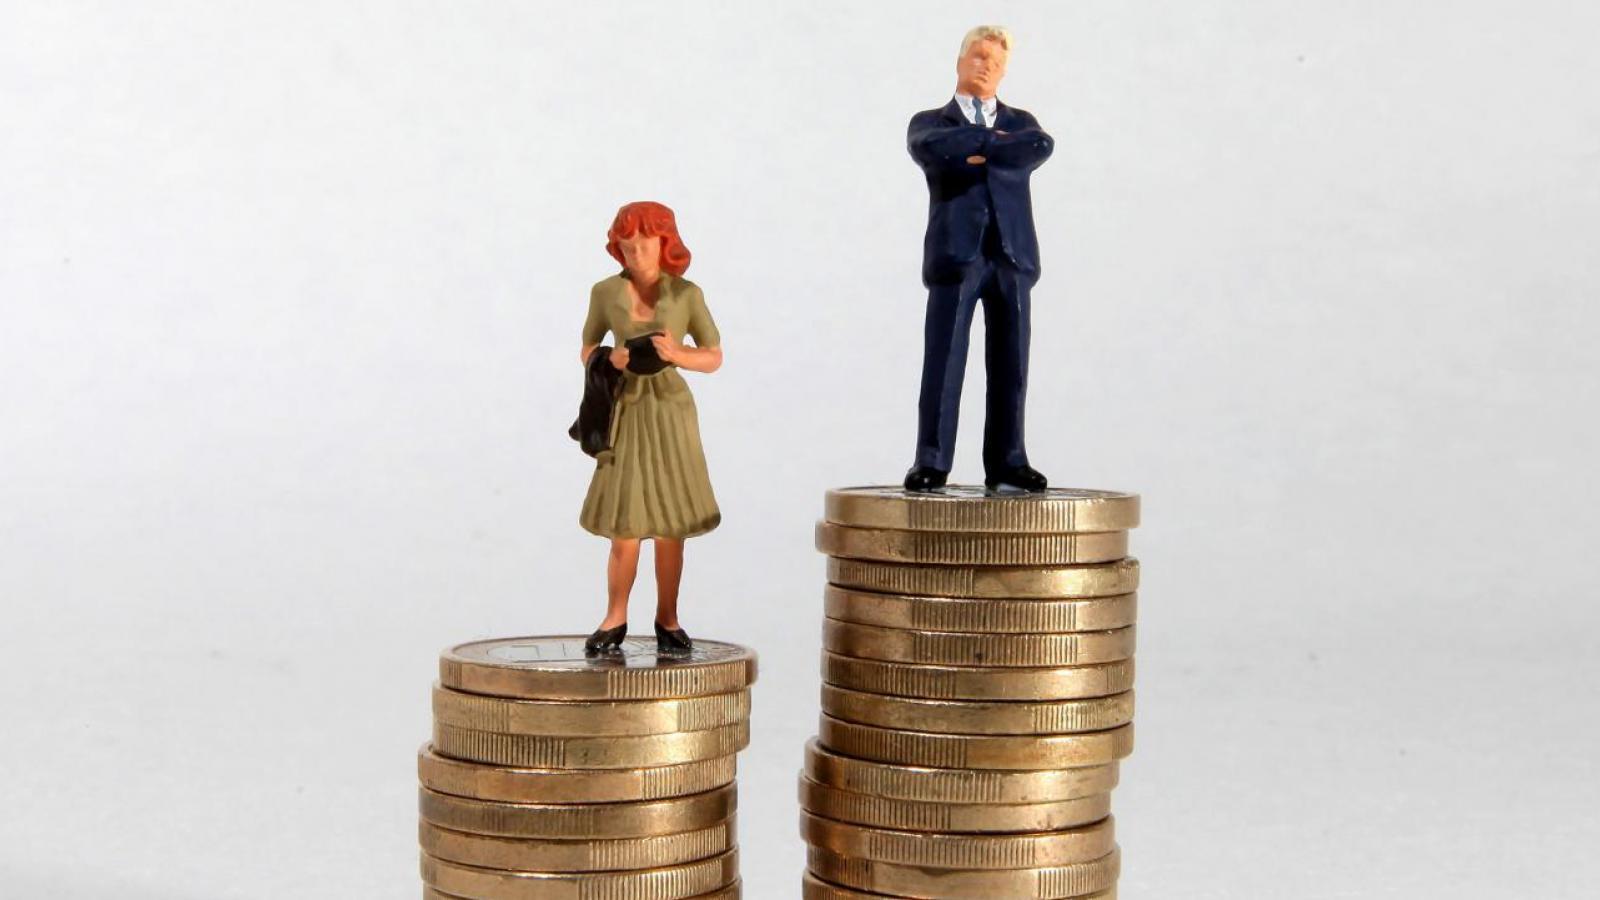 Разница в зарплатах мужчин и женщин